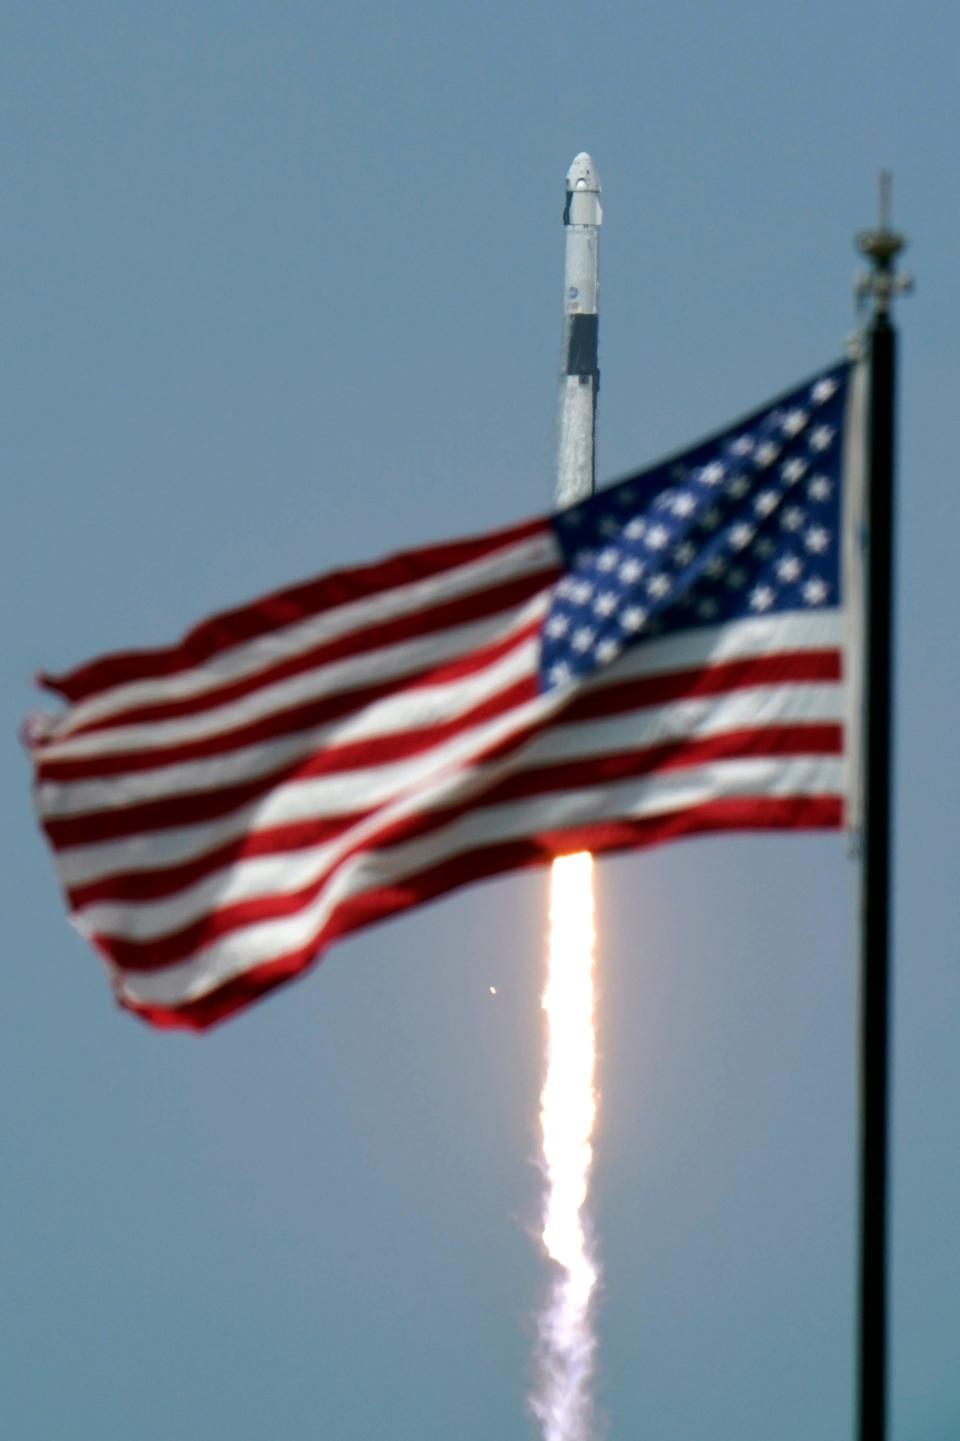 spacex falcon 9 rocket launch crew dragon endeavour spaceship nasa astronauts bob behnken doug hurley american us flag kennedy space center ksc AP_20151703843356